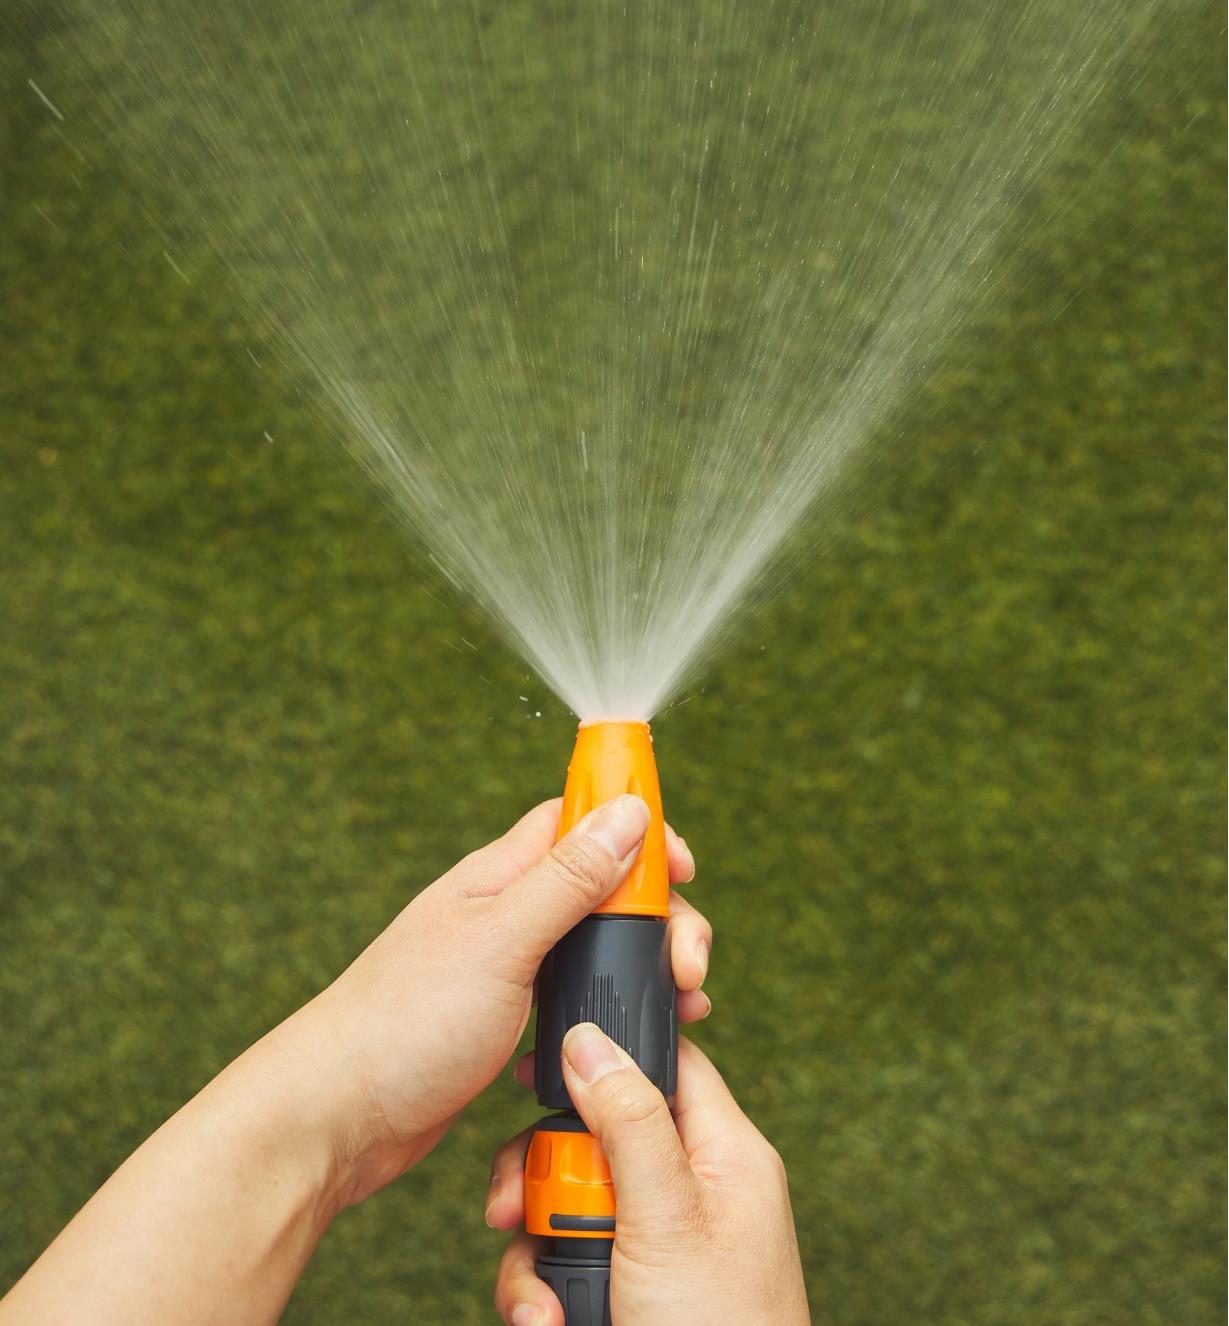 The spray gun on the hose sprays a fan of water